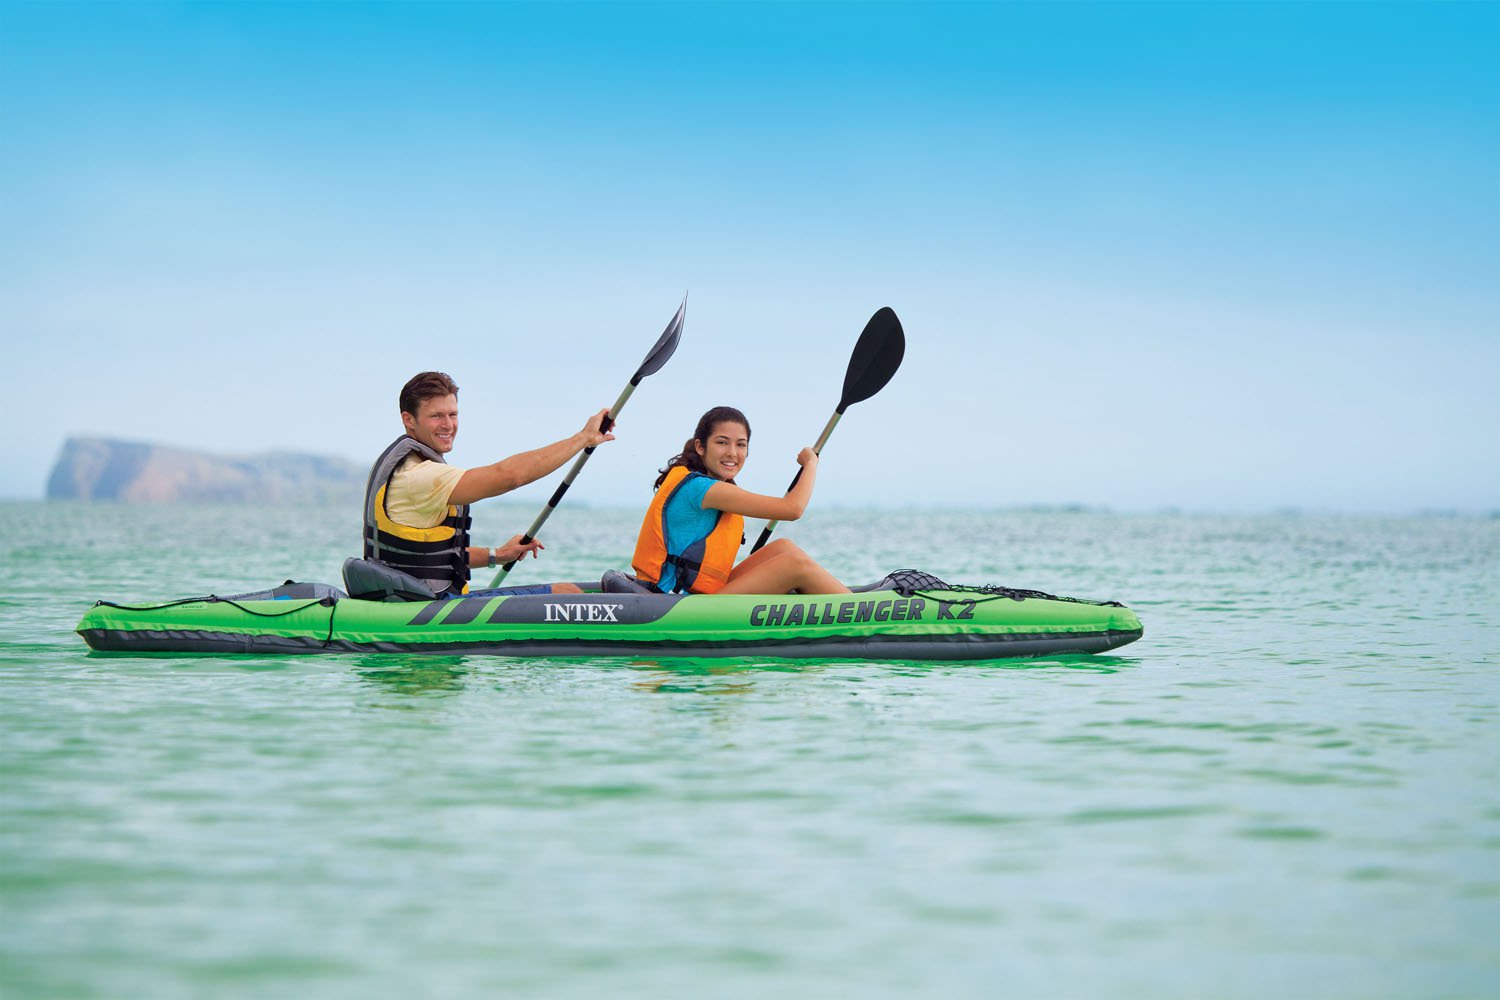 Challenger K2 kayak for $60, free shipping